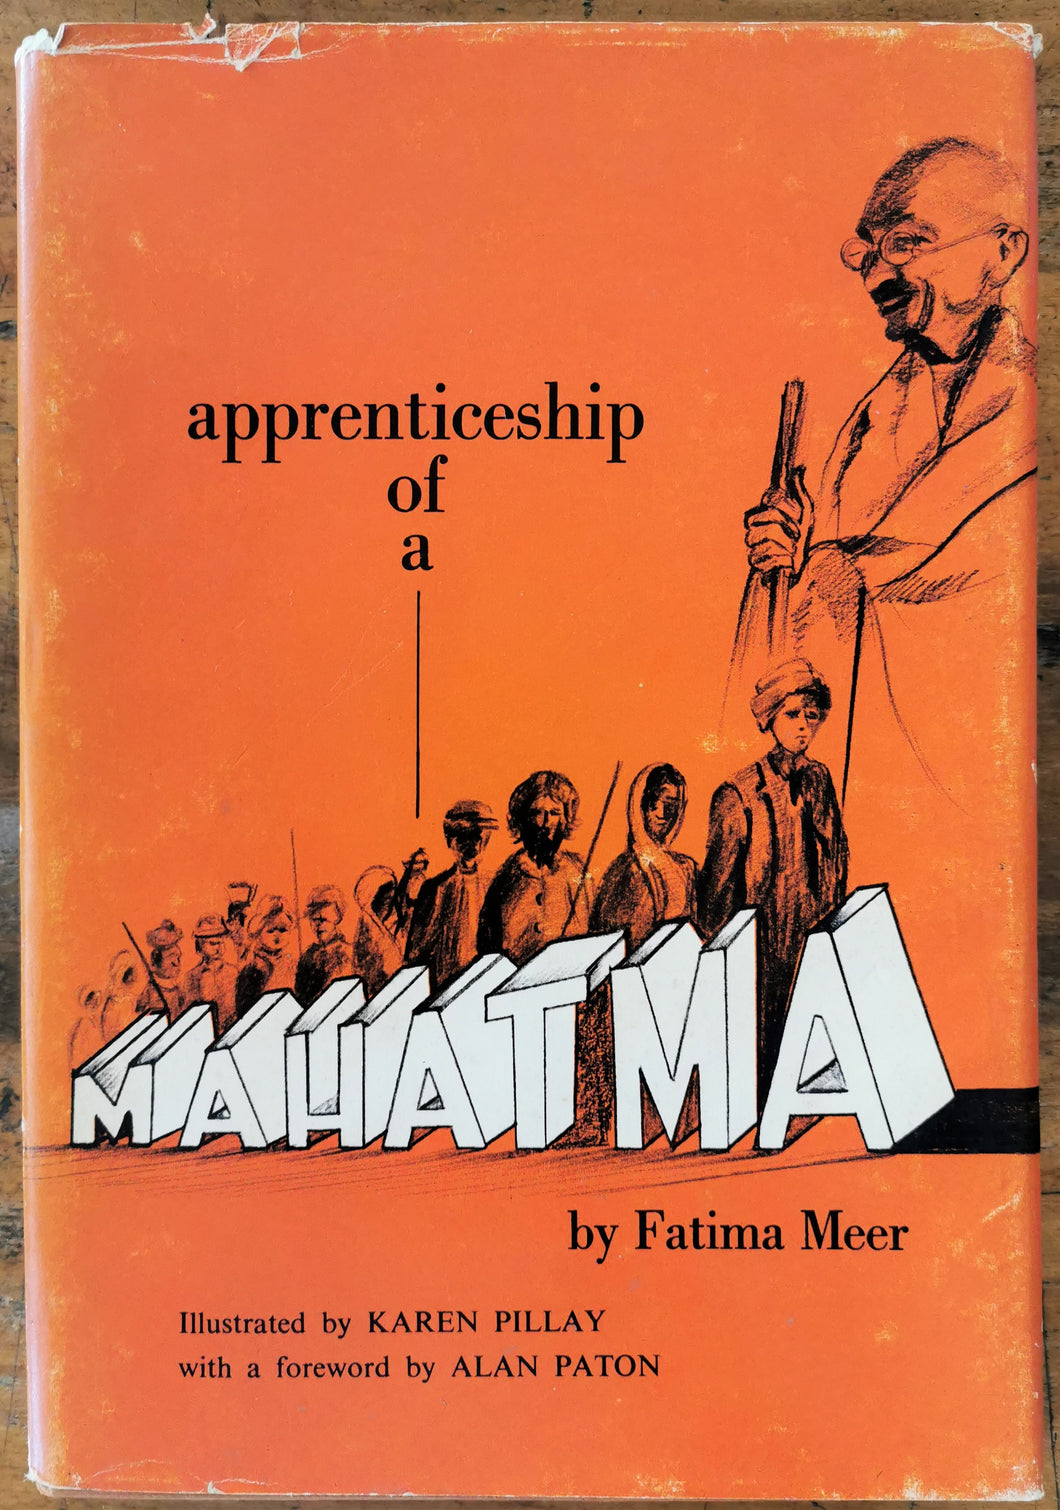 Apprenticeship of a Mahatma by Fatima Meer